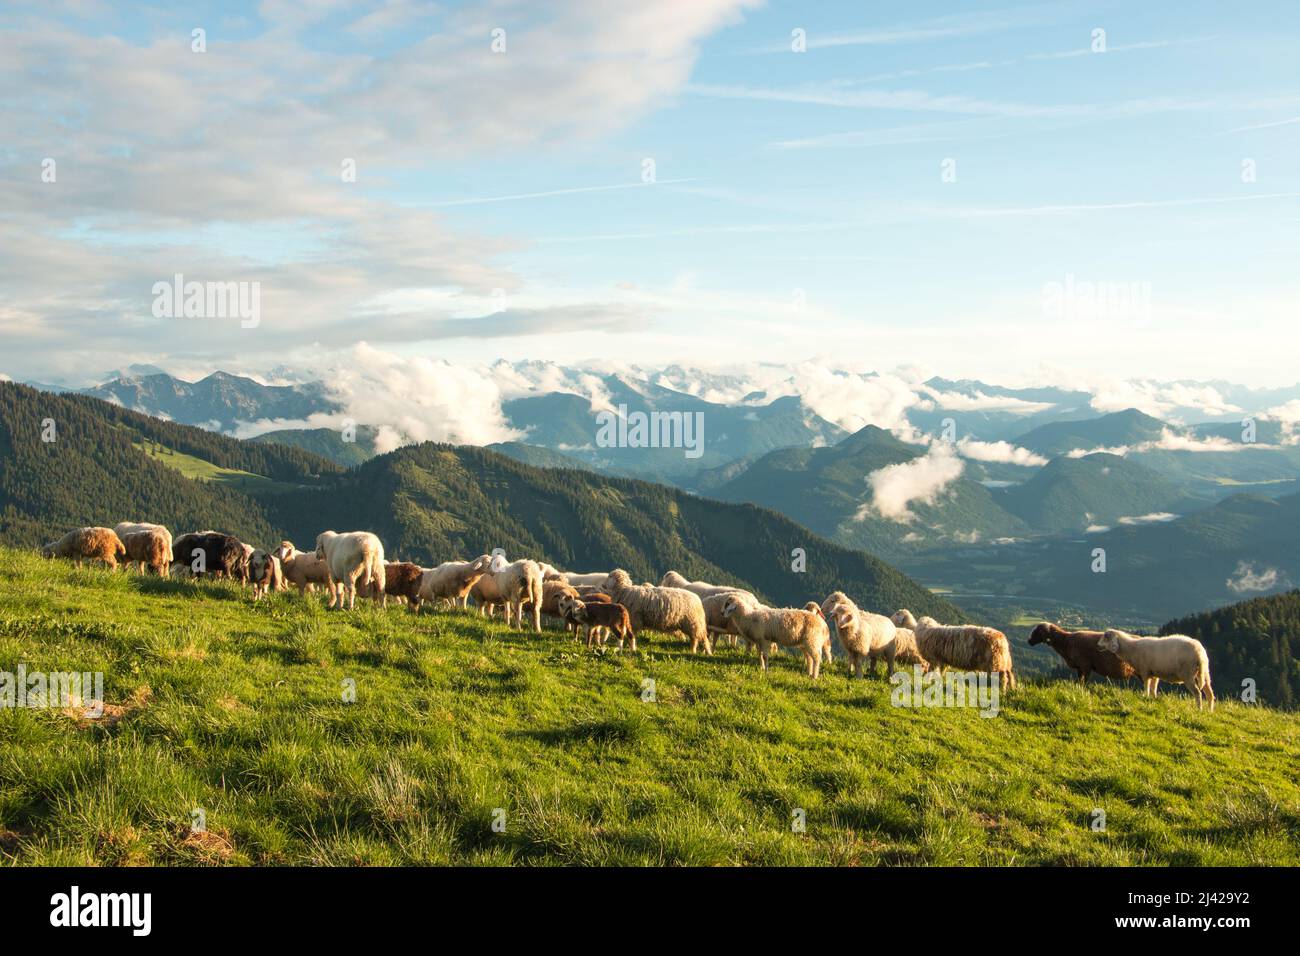 mountain sheep in the bavaria mountains. High quality photo Stock Photo